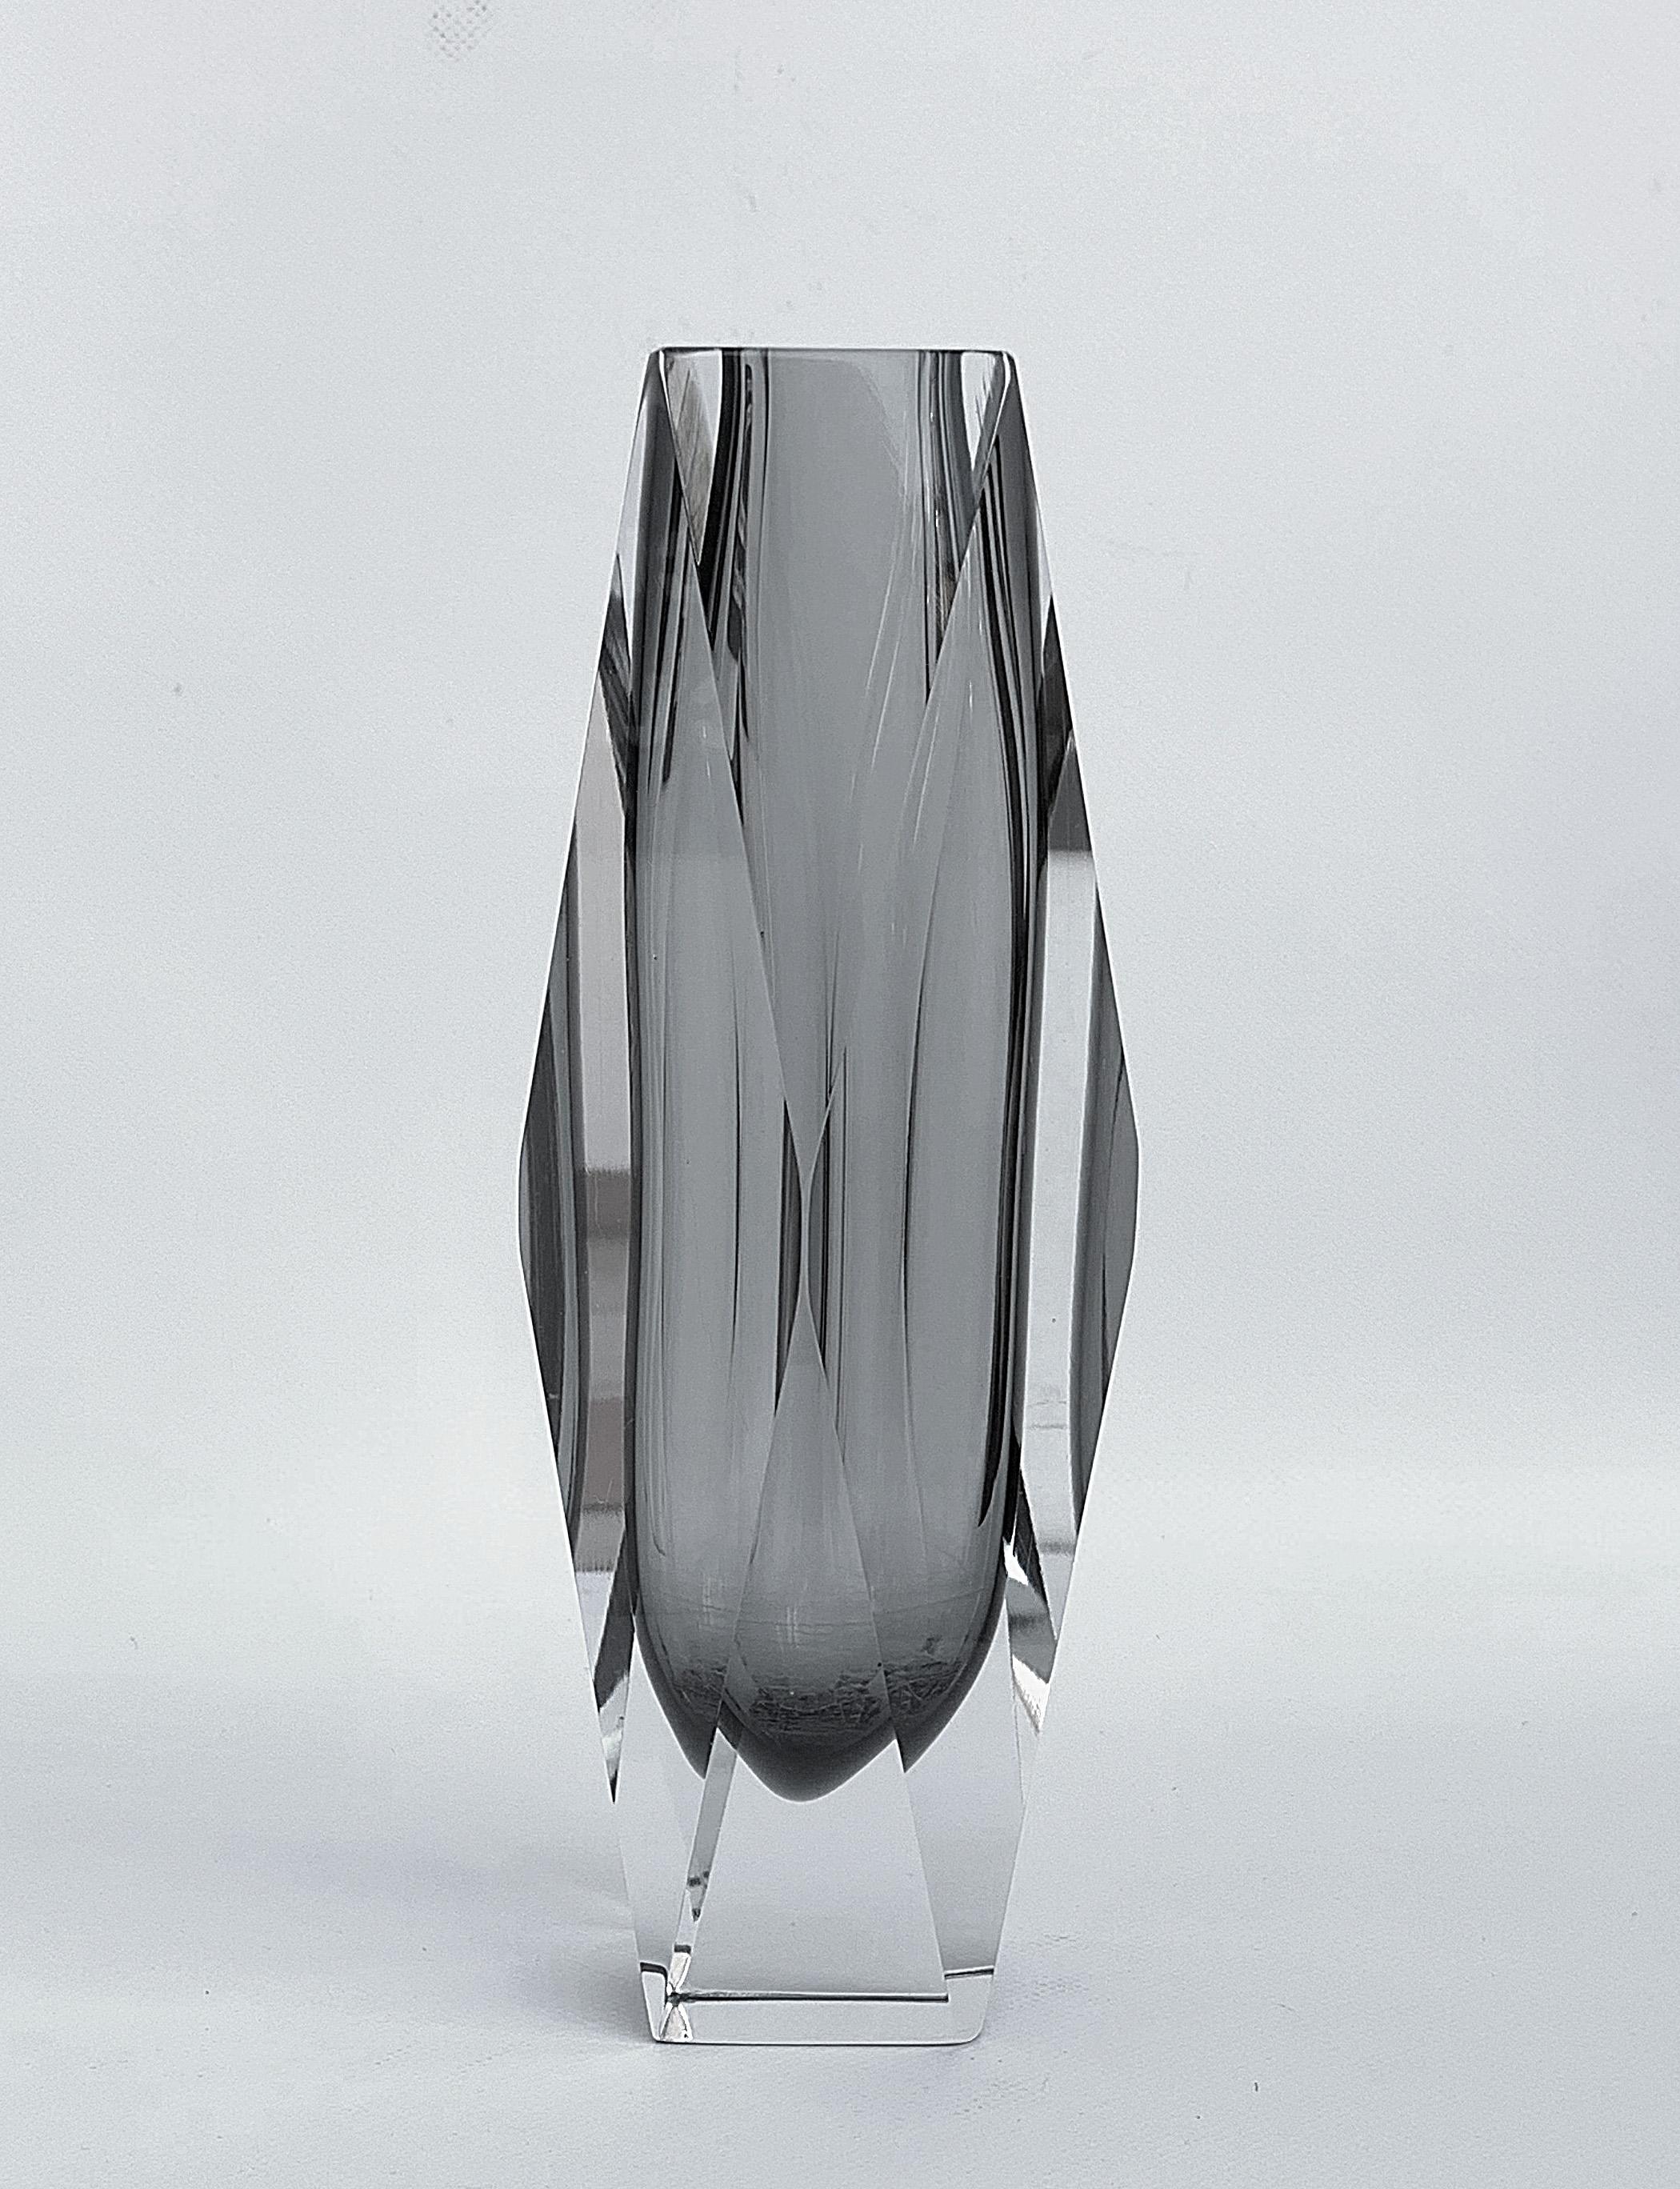 Murano, Submerged Glass Vase, Colour Smoky Gray, Mandruzzato Italy, 1960s For Sale 7